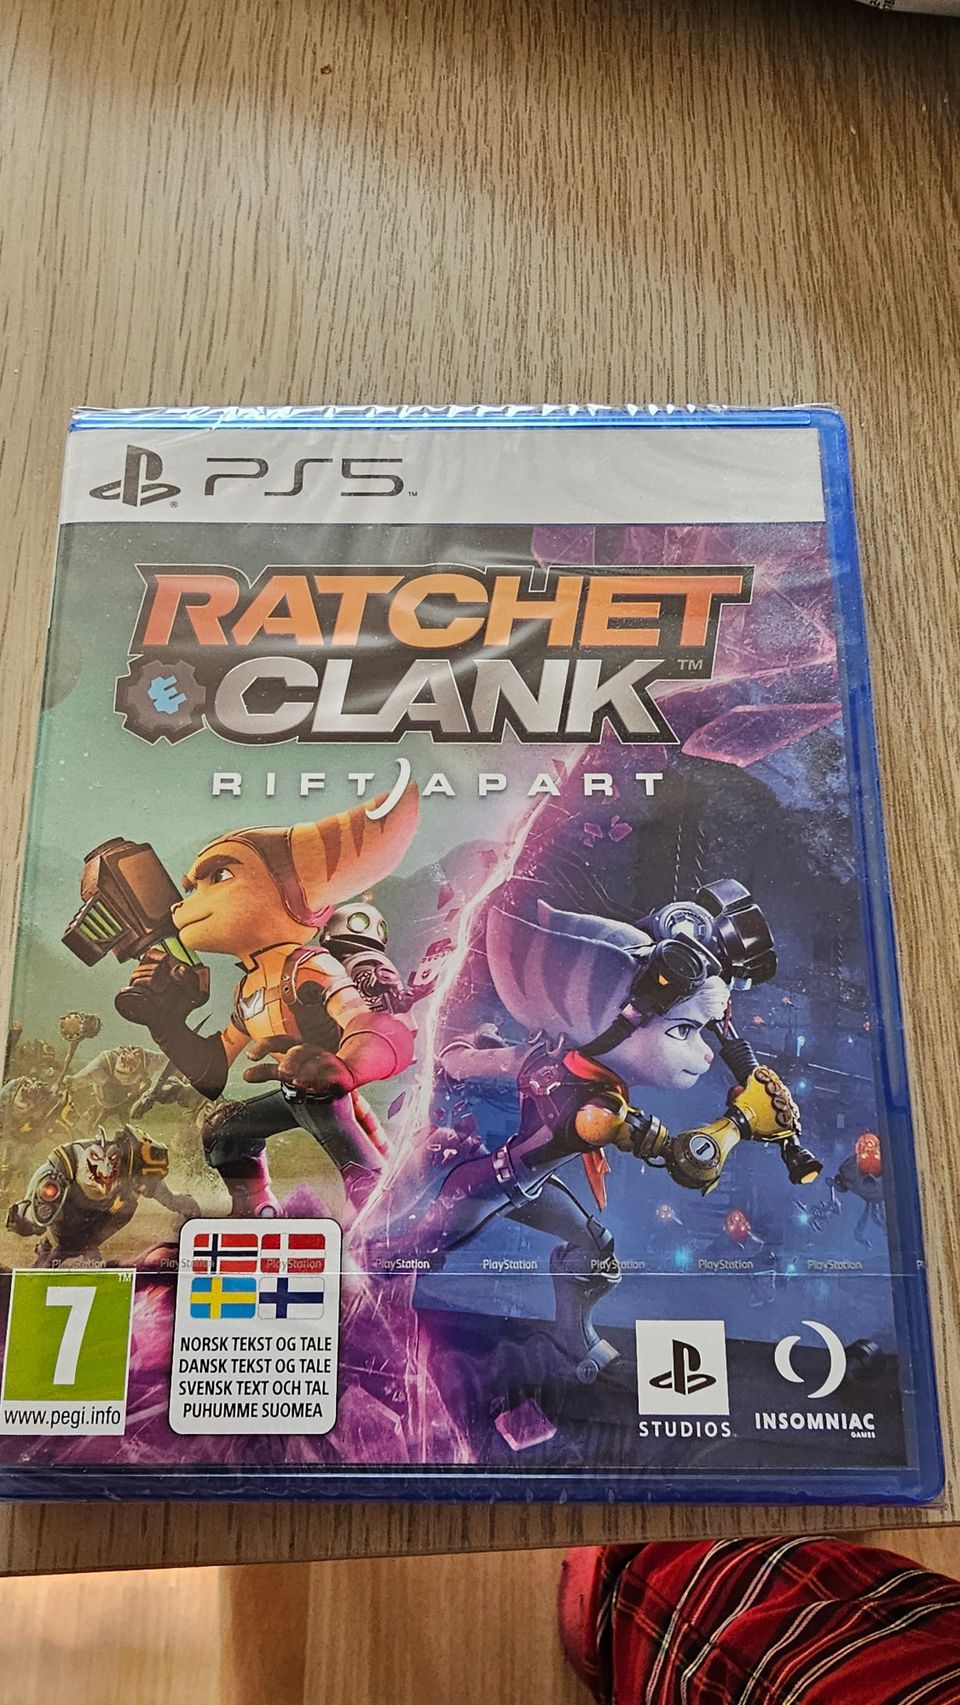 Ratchet & Clank Rift Apart - PS5